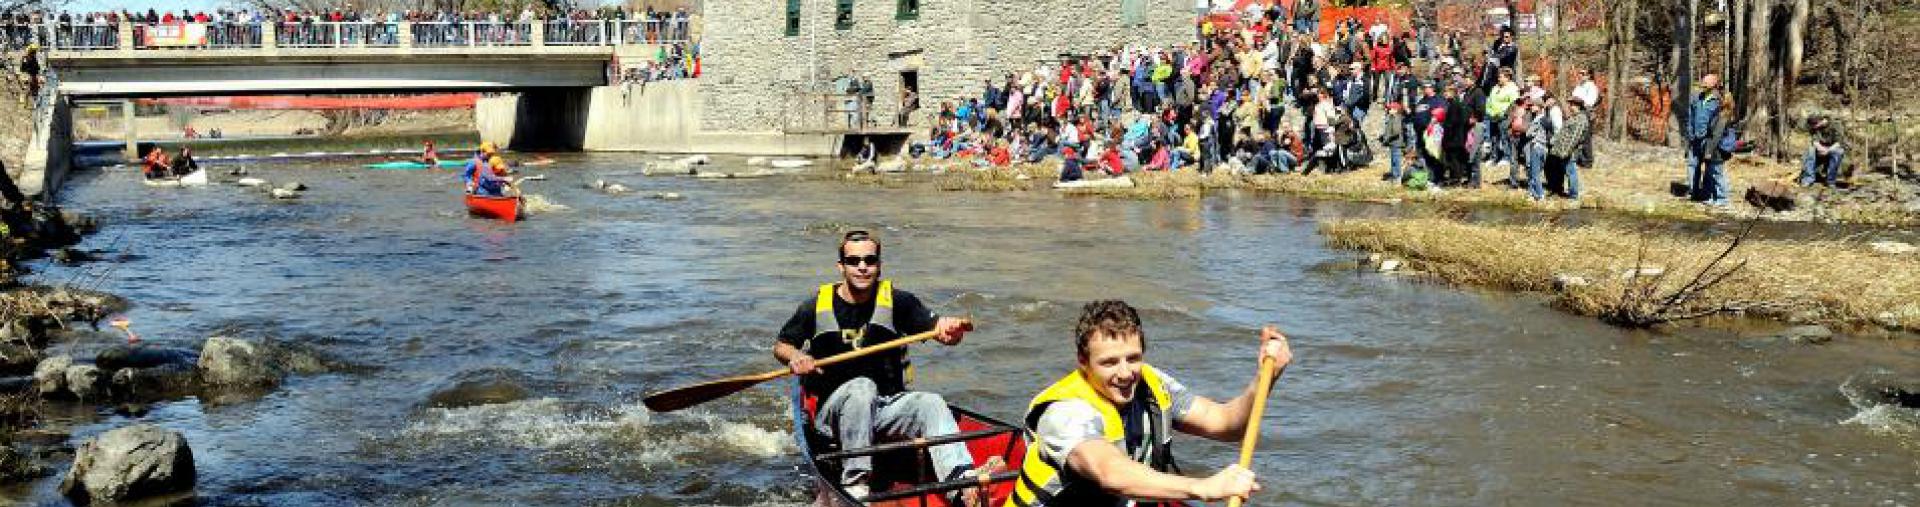 canoeists racing down Raisin River